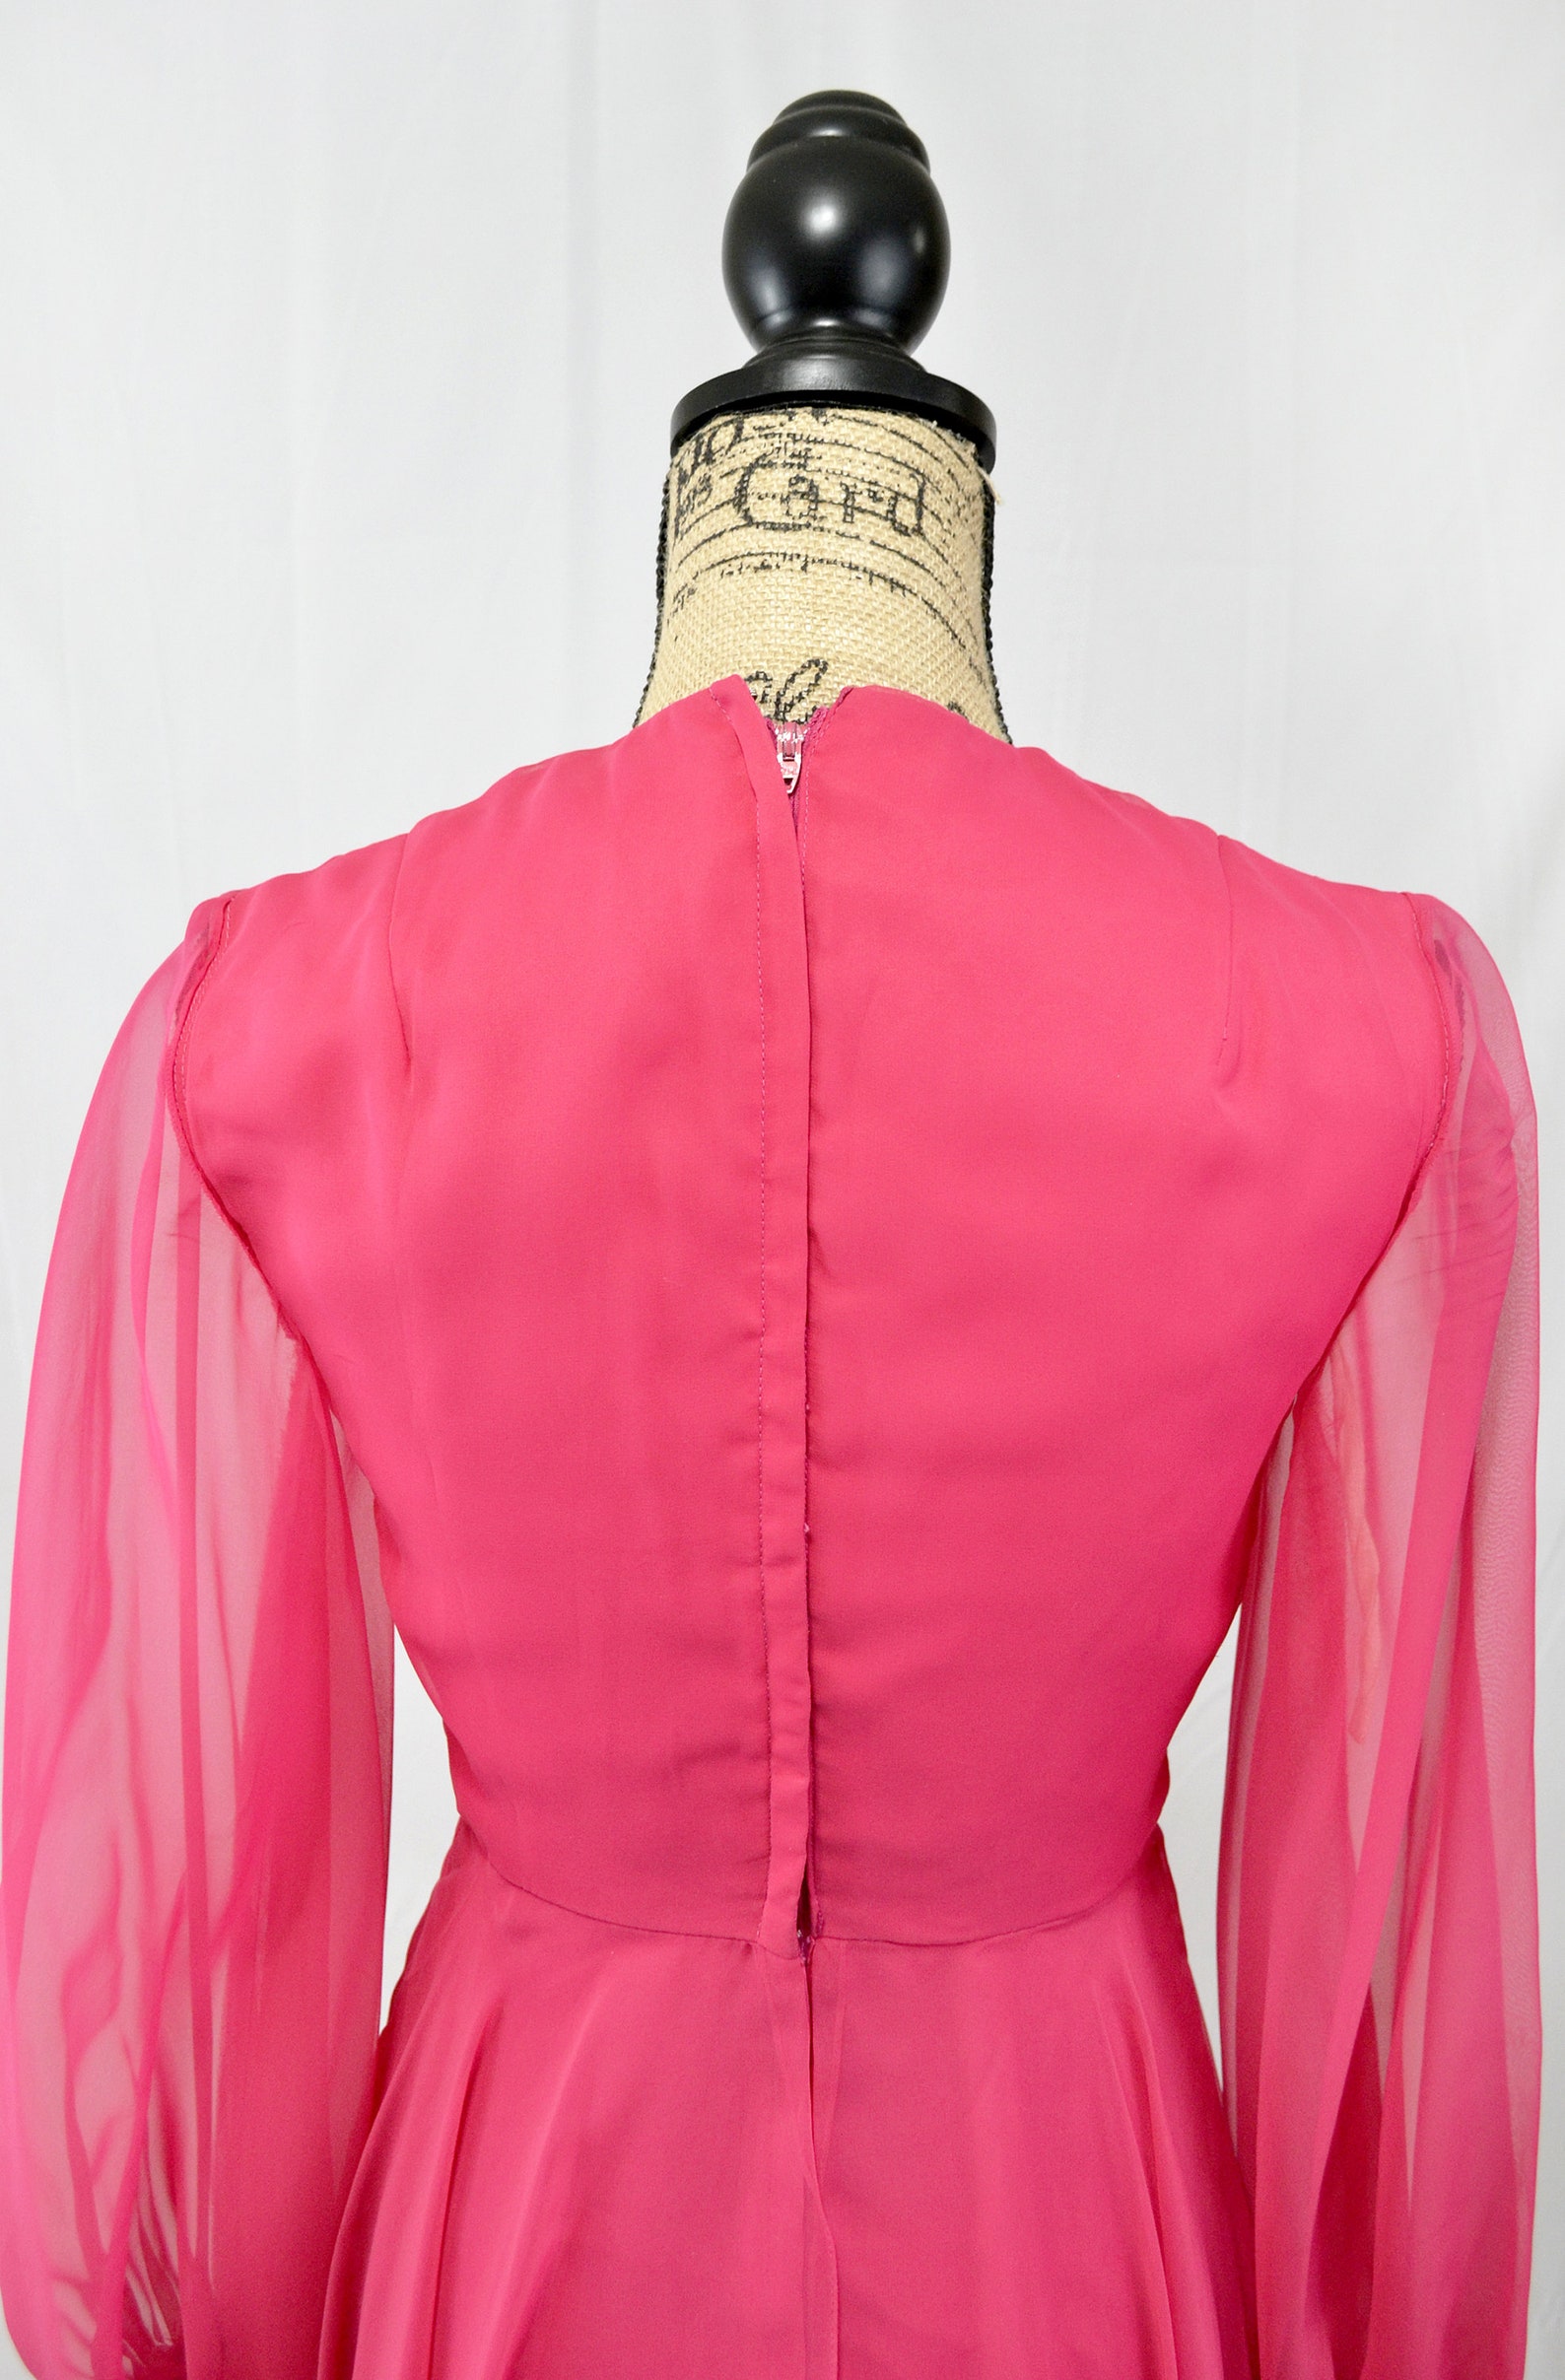 Vintage 70s hot pink formal chiffon dress Mike Benet Formals | Etsy